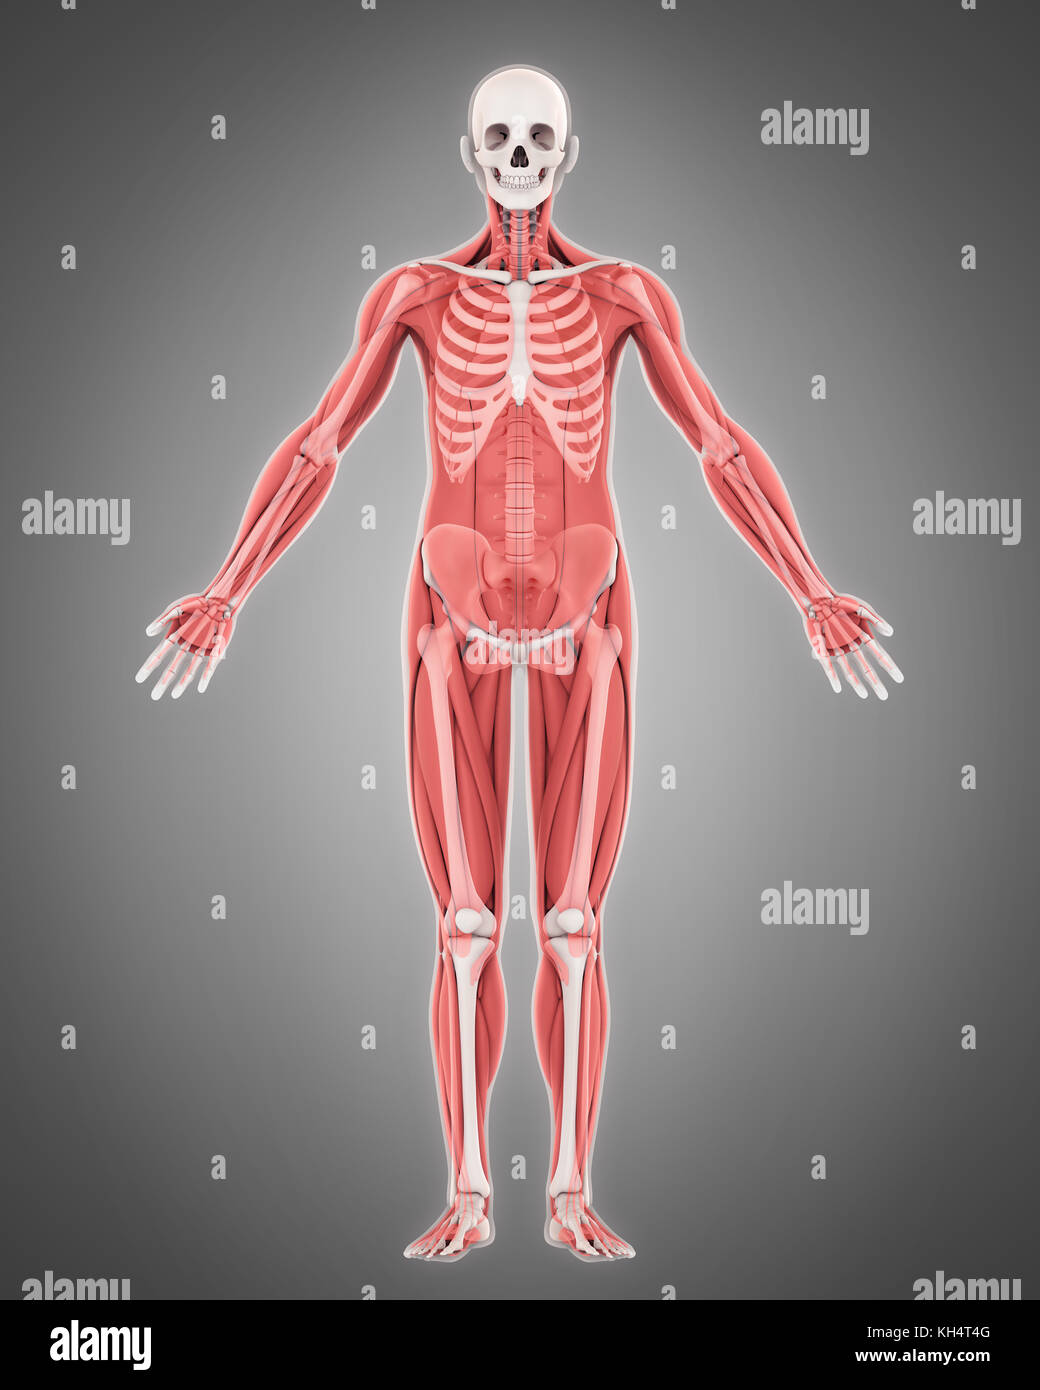 Human Skeleton And Muscle Anatomy Stock Photo Alamy